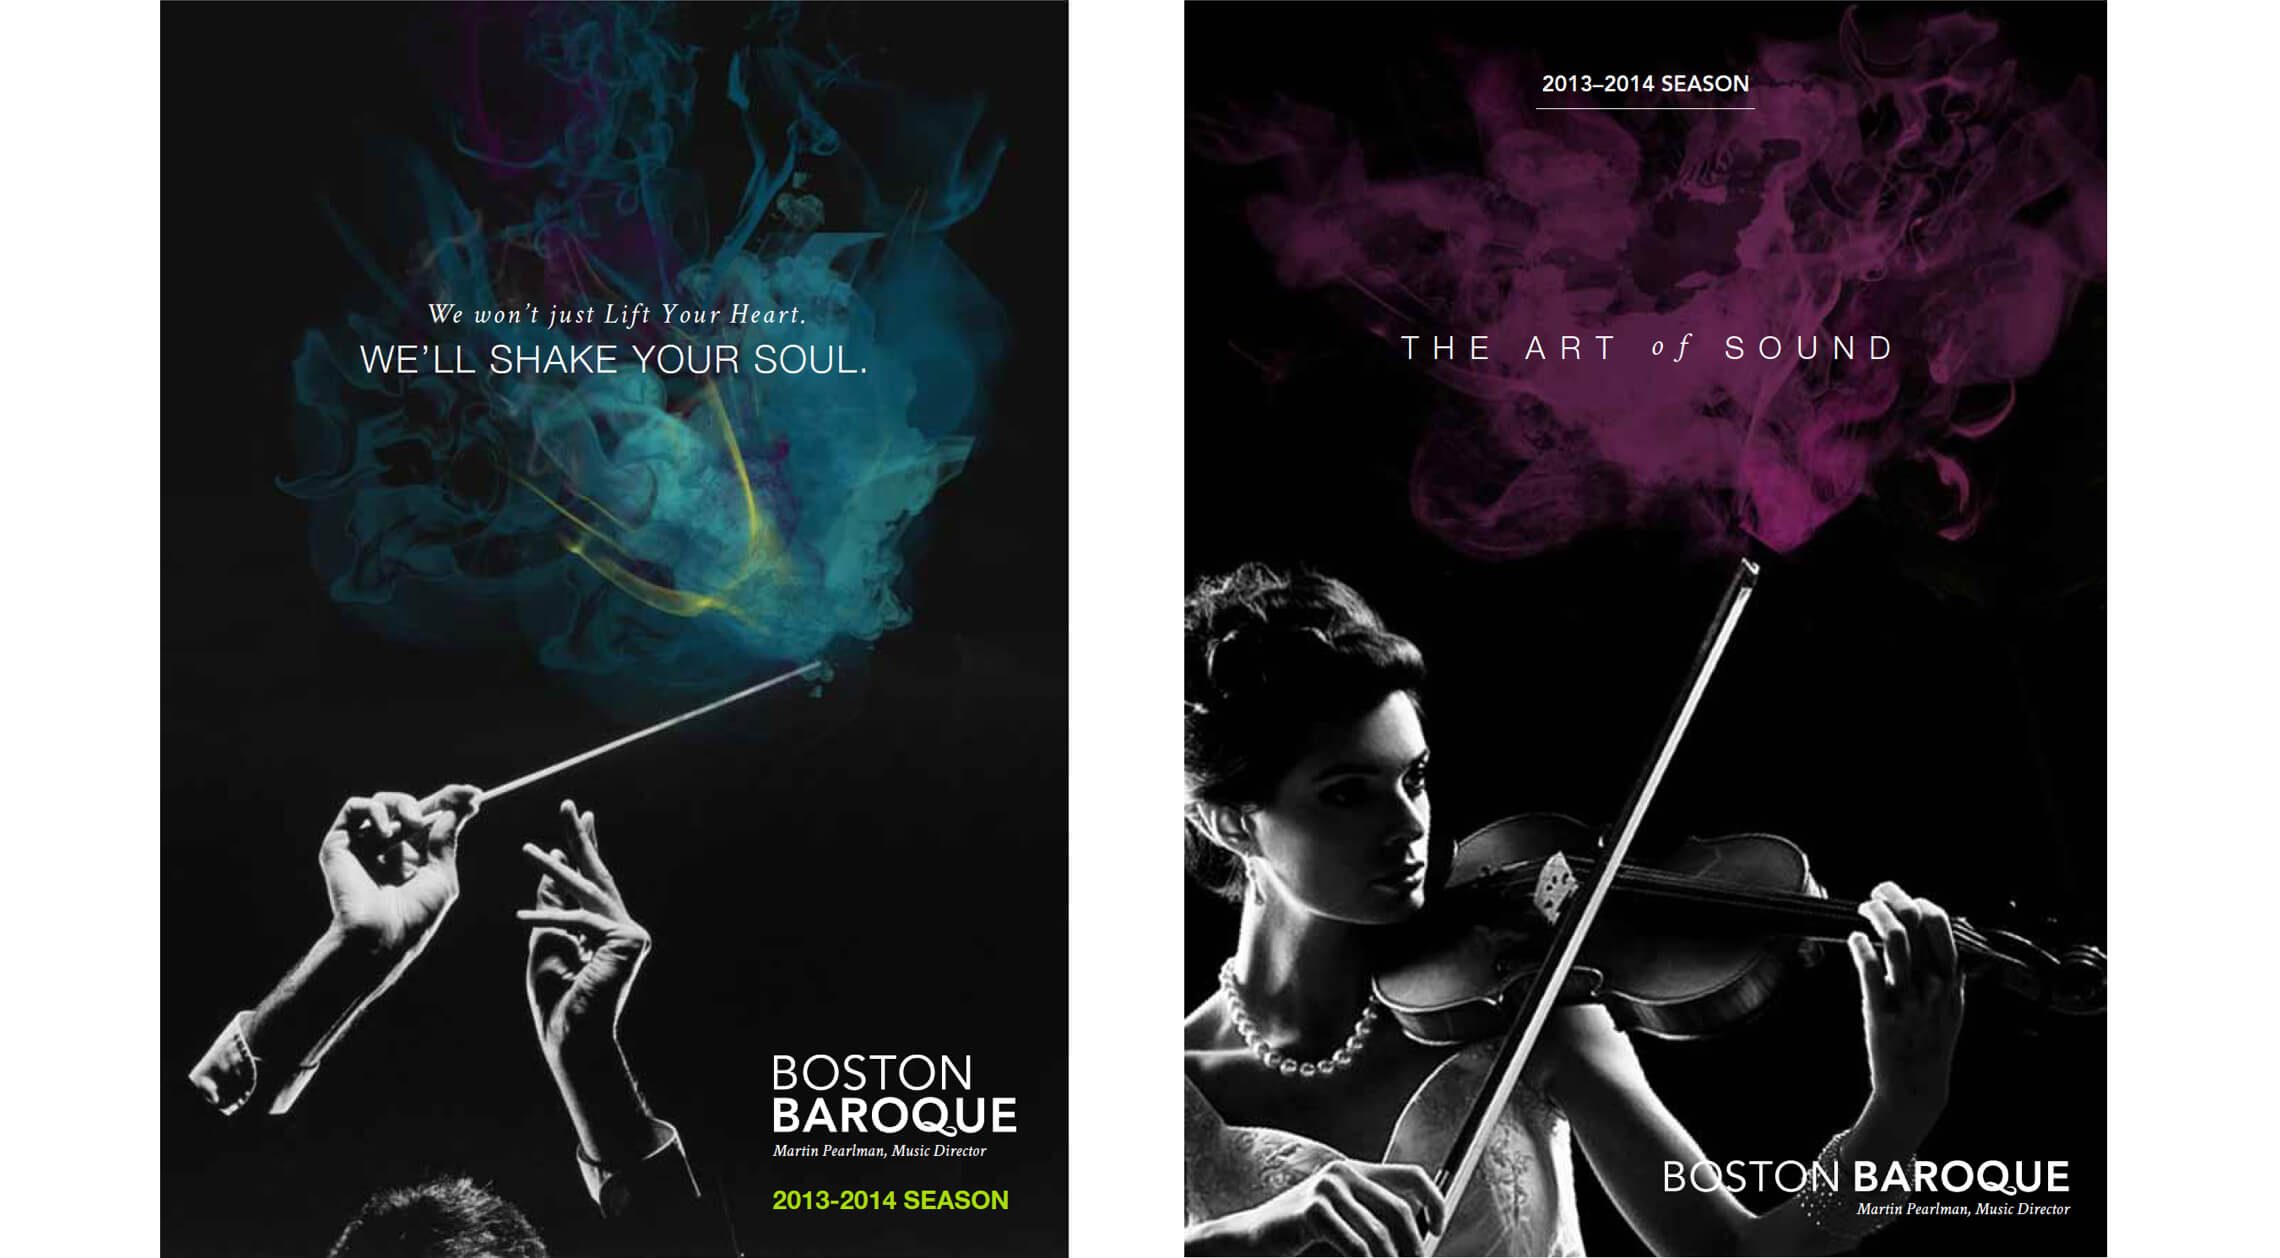 Boston Baroque - flyers for 2013-2014 season